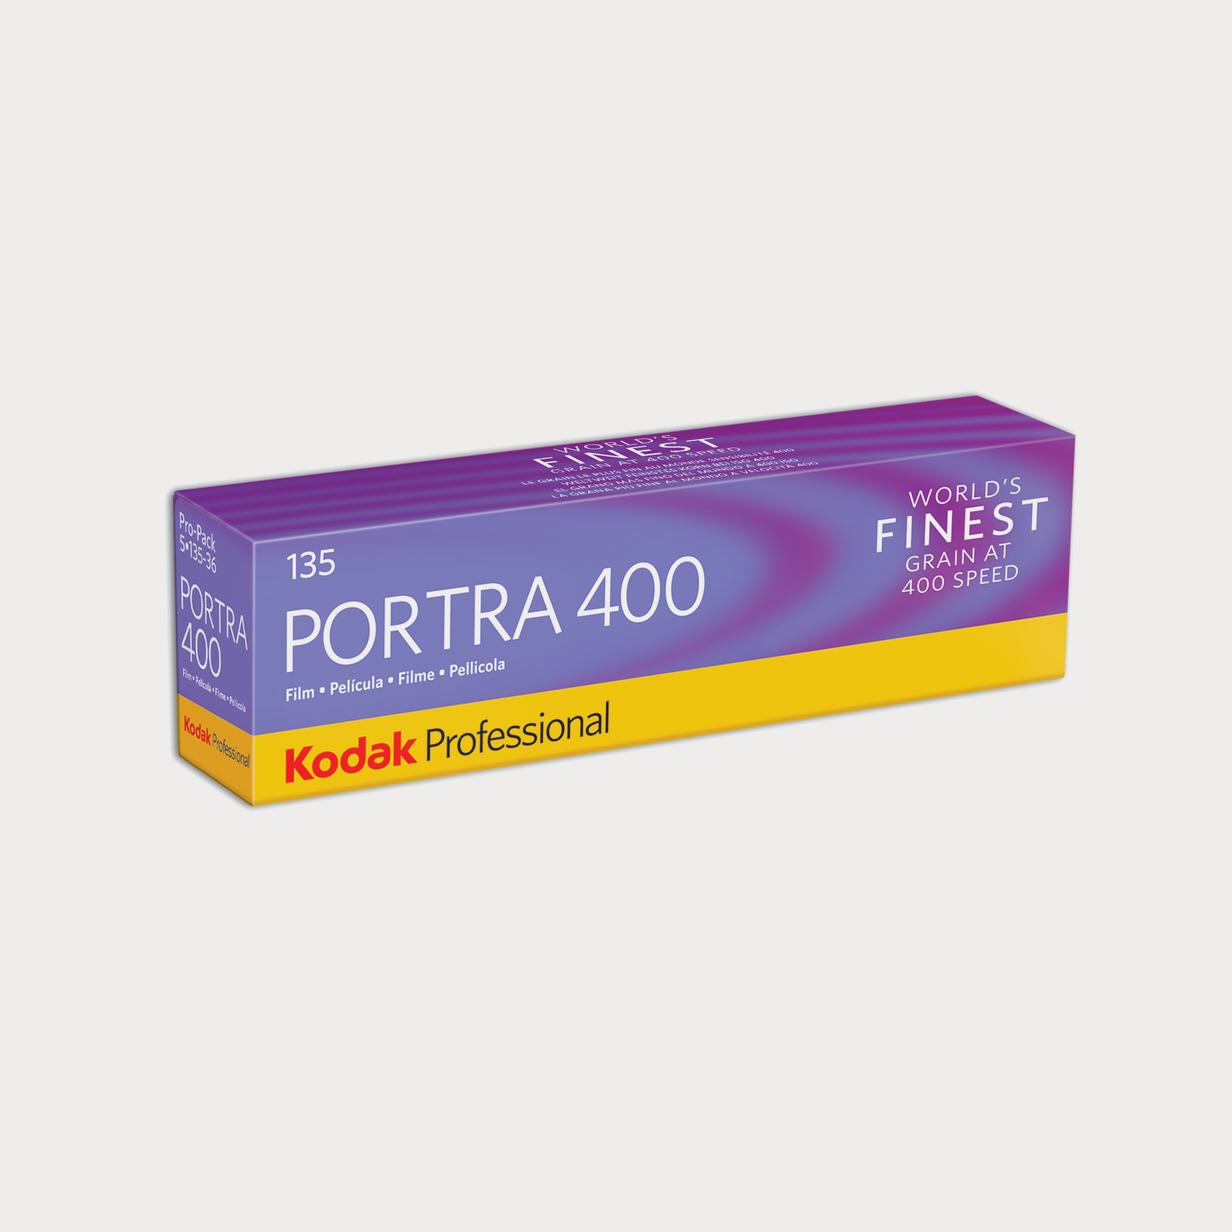 Moment kodak 6031678 Professional Portra 400 Film 135 36 Propack 5 Rolls 01